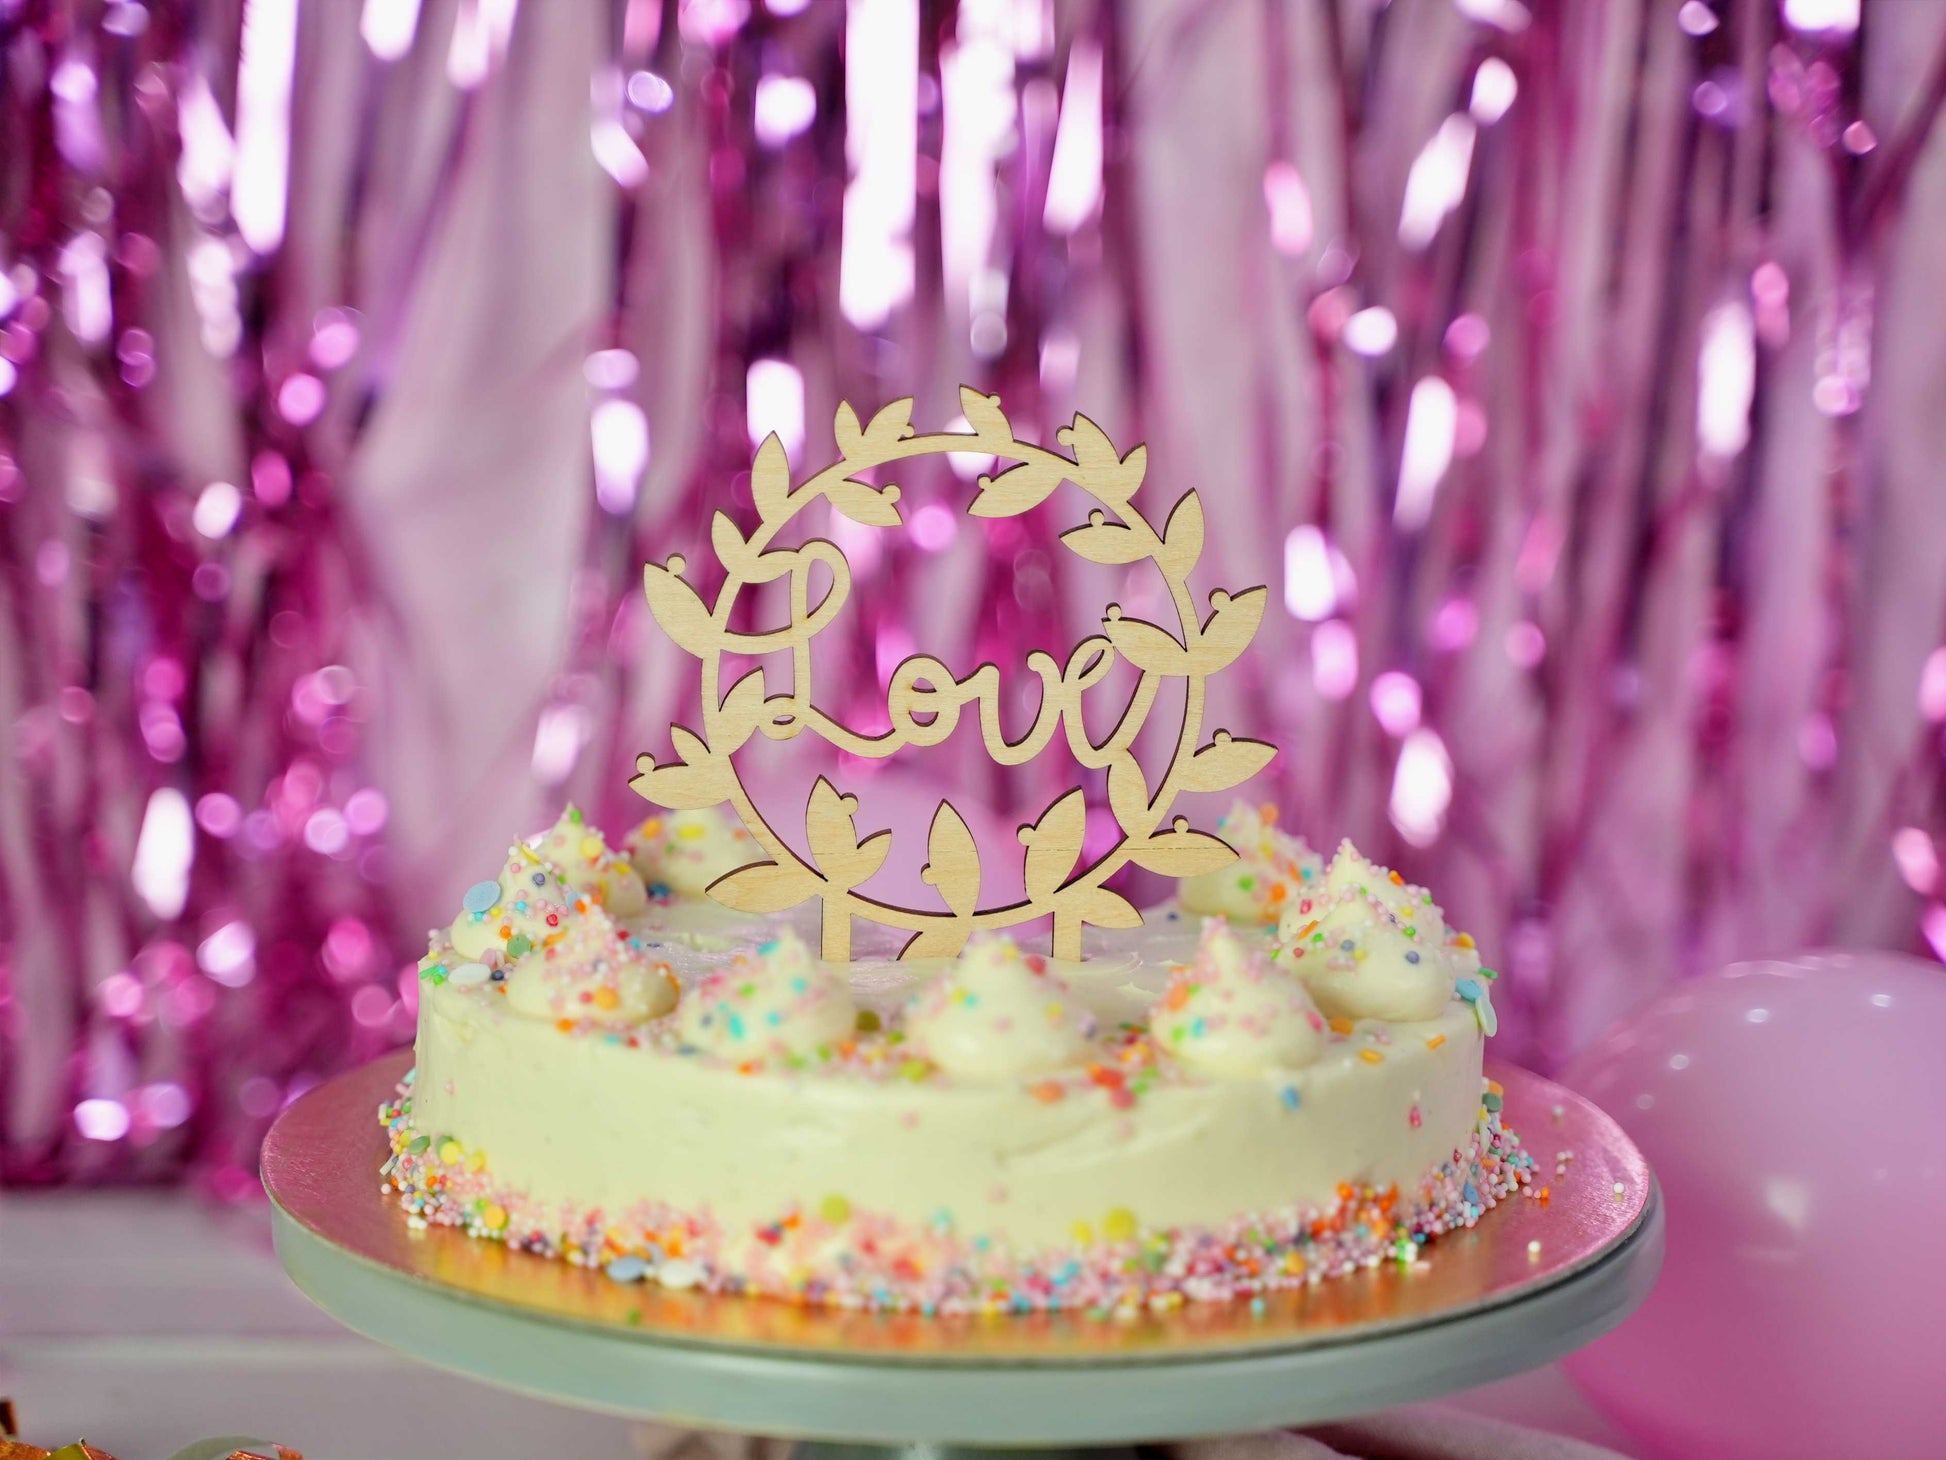 Kikis Cake Topper - Love -  von Kikis Kitchen - Nur €5.90! Bestelle jetzt Kikis Kitchen